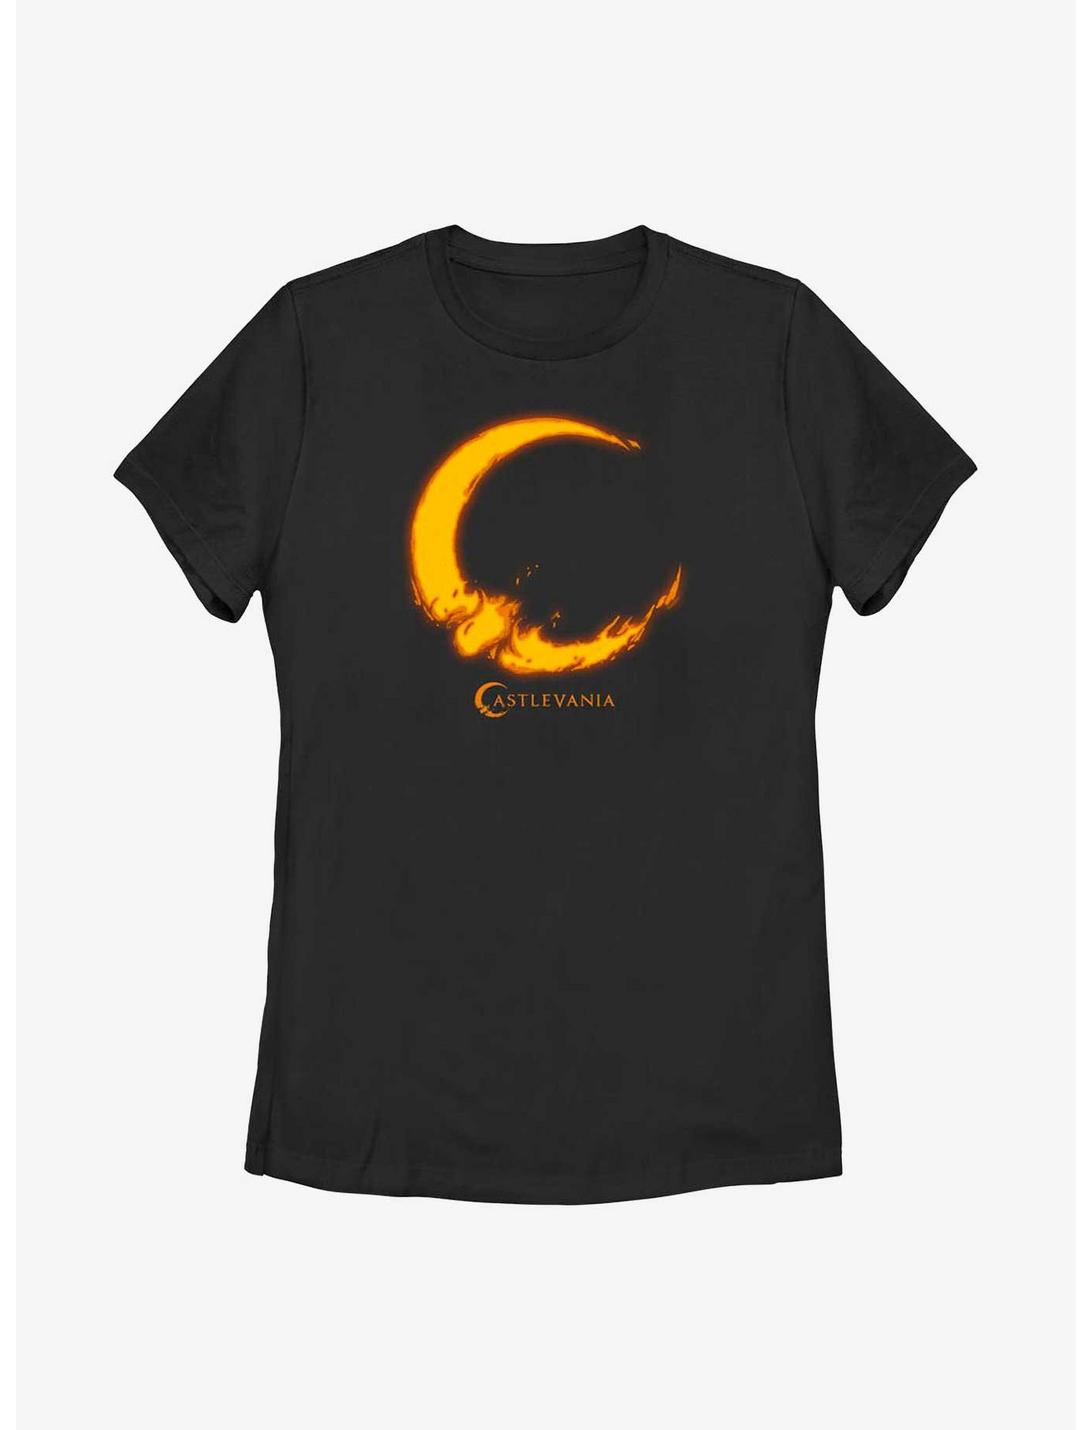 Castlevania Moon Fire Womens T-Shirt, BLACK, hi-res